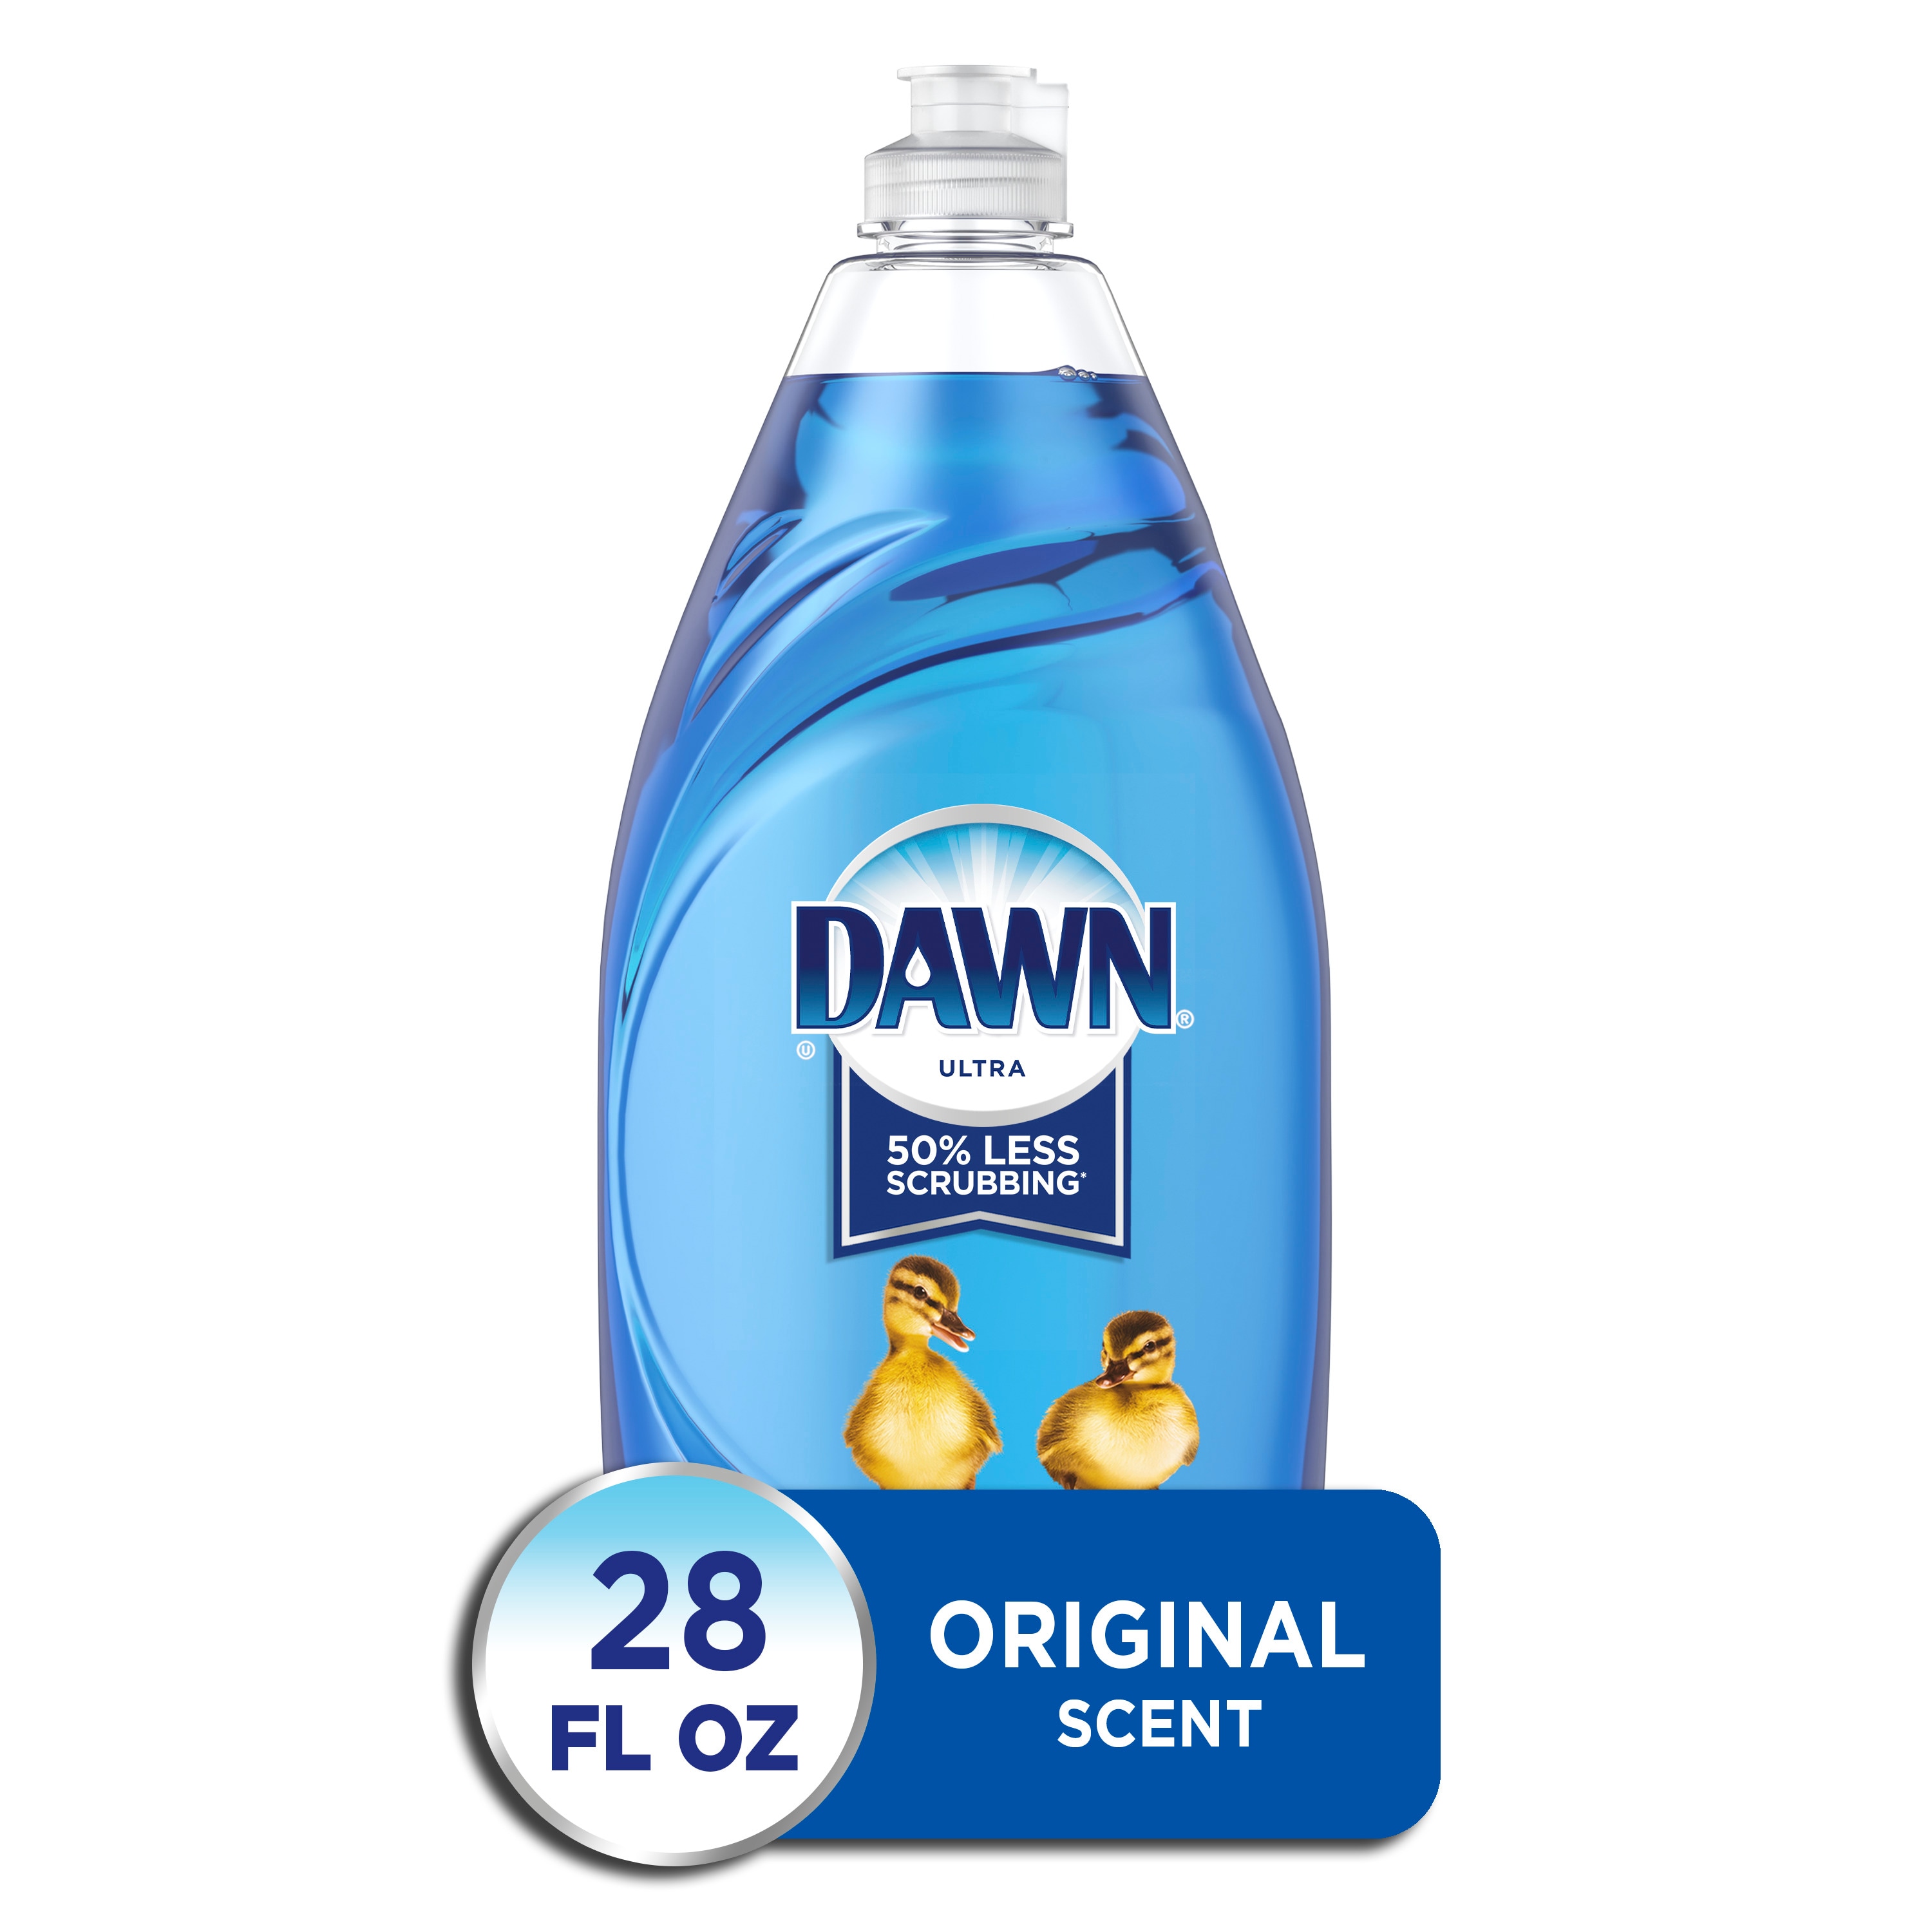 Dawn Platinum 56 oz. Heavy-Duty Degreasing Dish Soap (2-Pack)